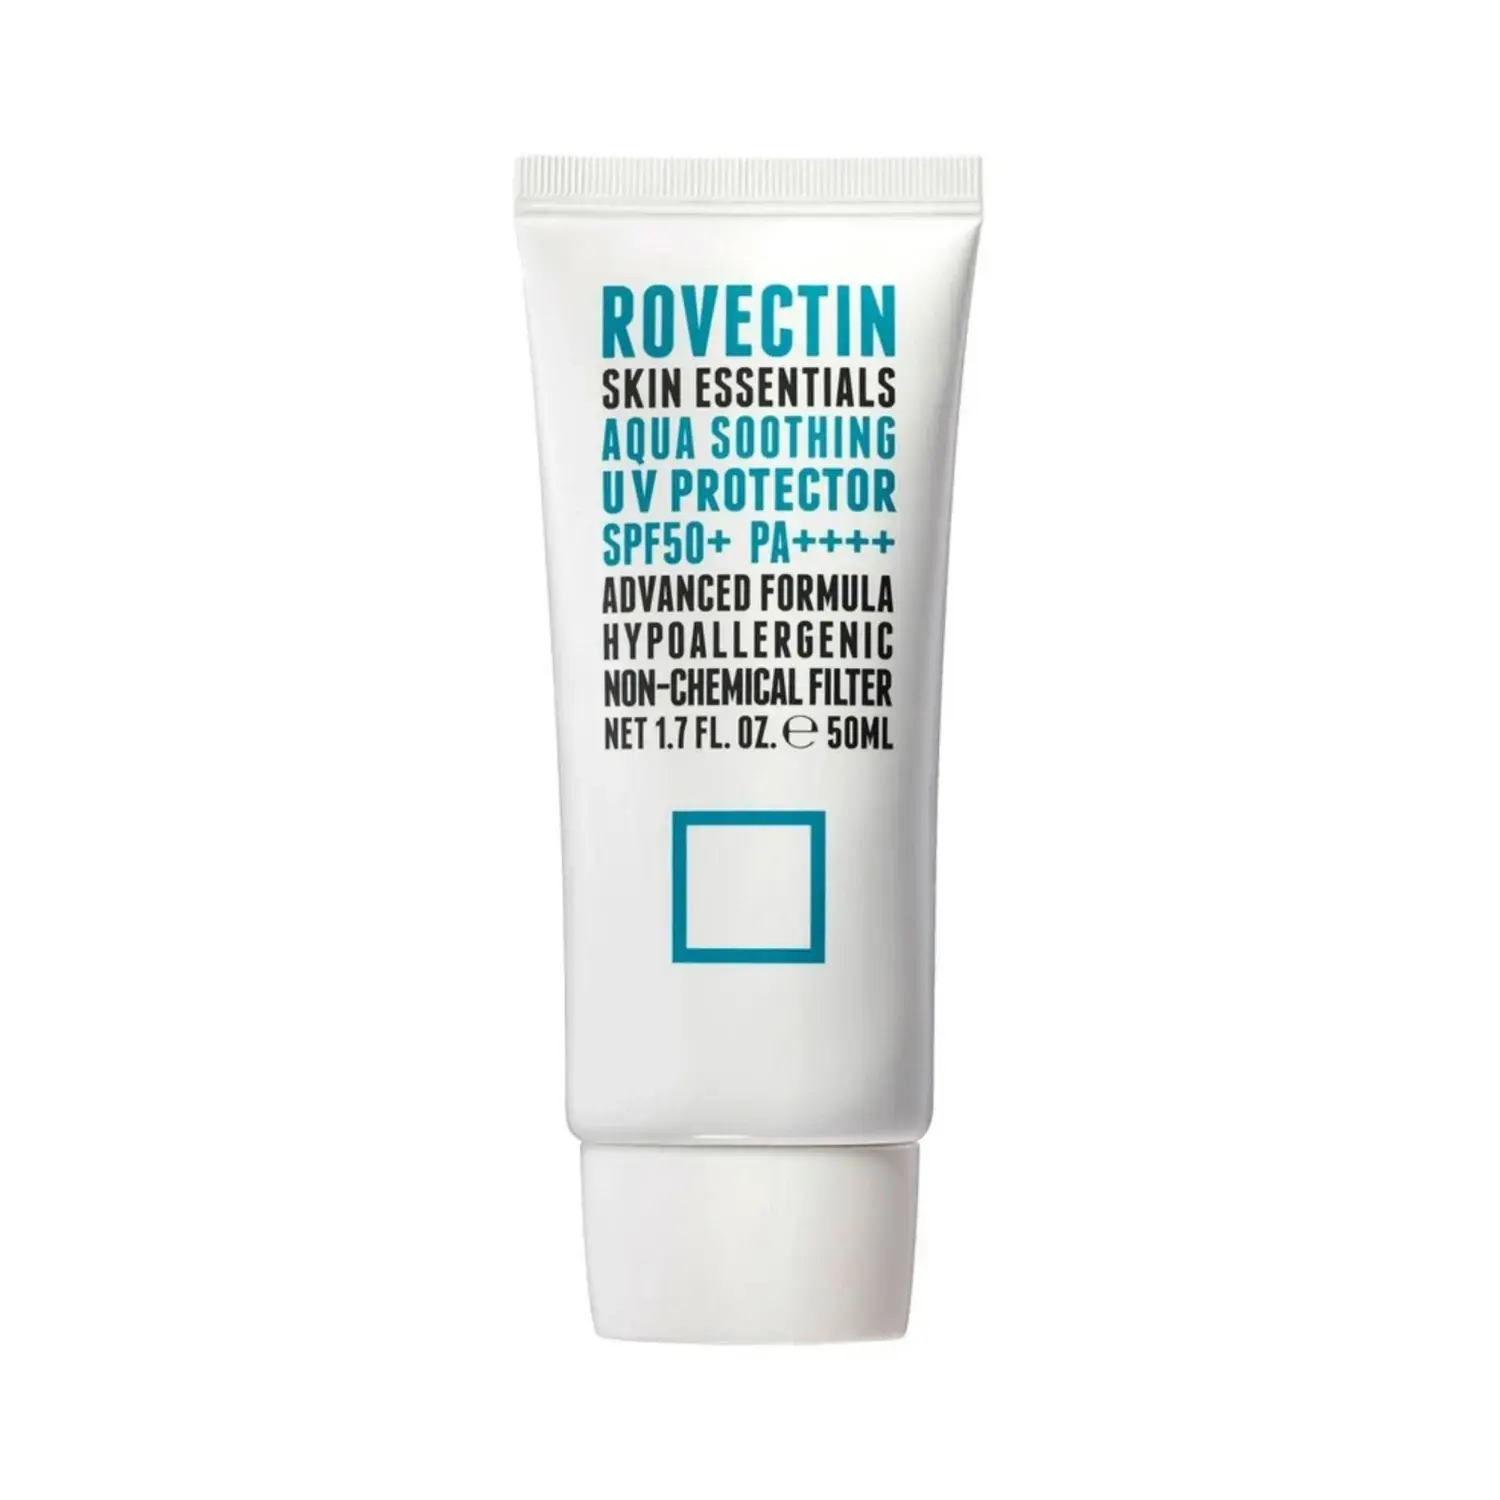 Rovectin Skin Essentials Aqua Soothing UV Protector SPF 50+ PA++++